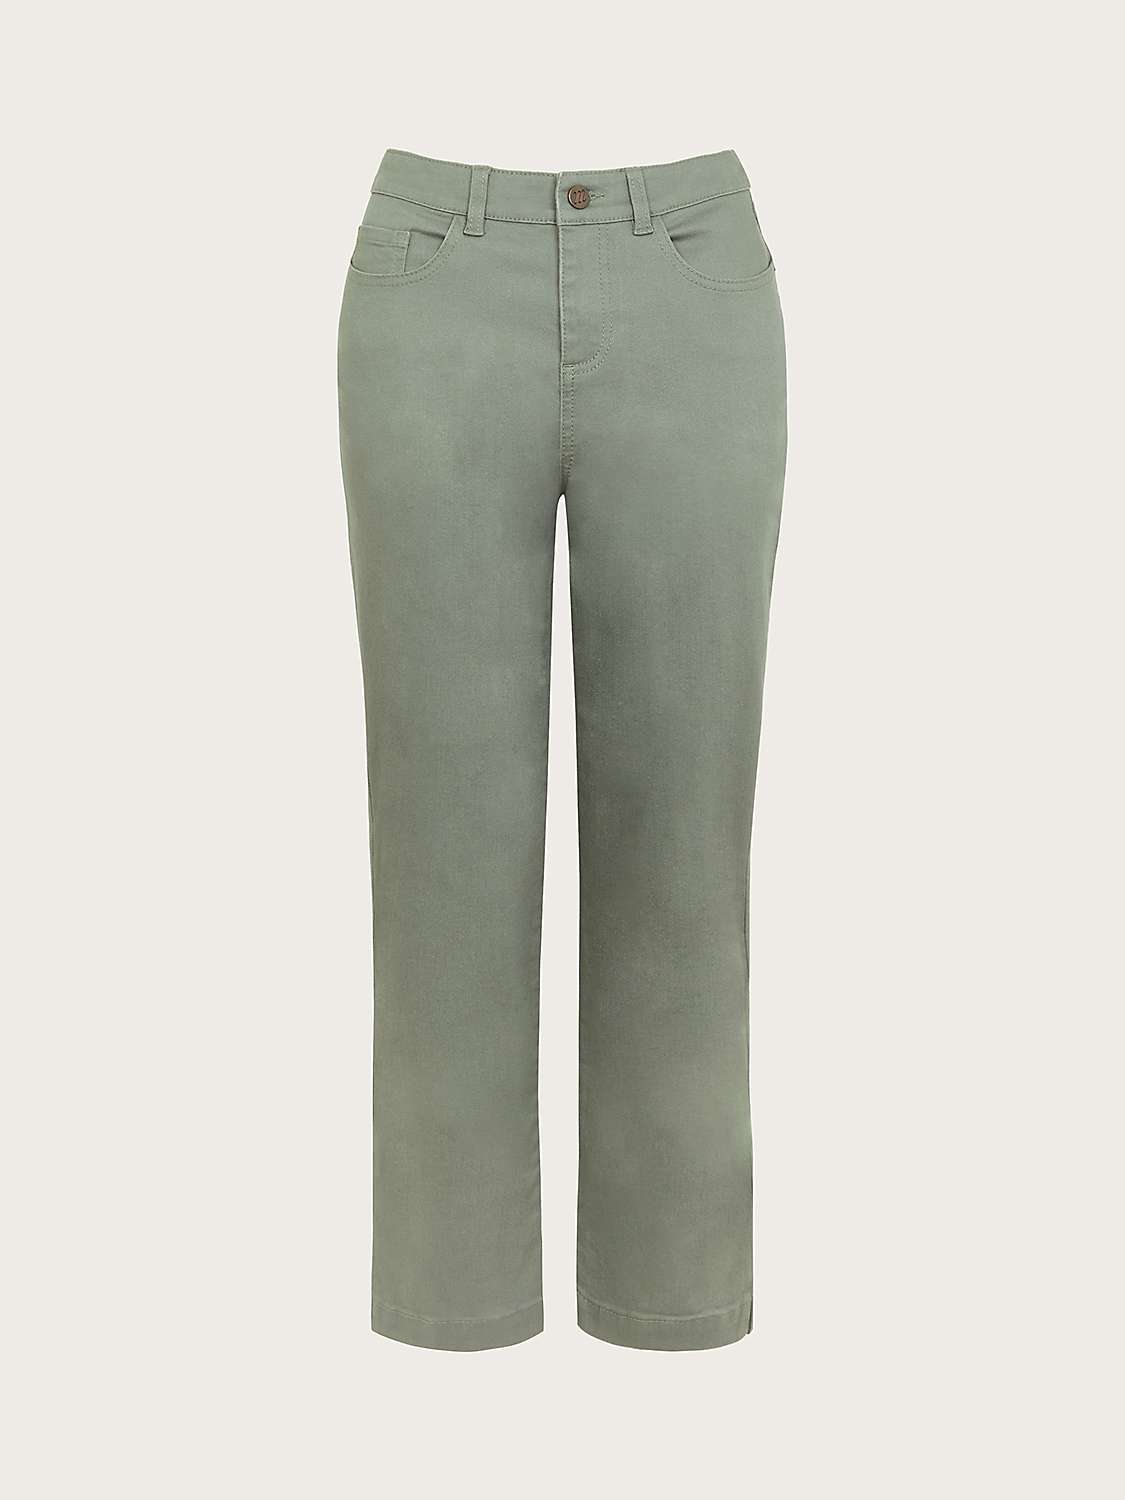 Buy Monsoon Safaia 7/8 Skinny Jeans, Khaki Online at johnlewis.com